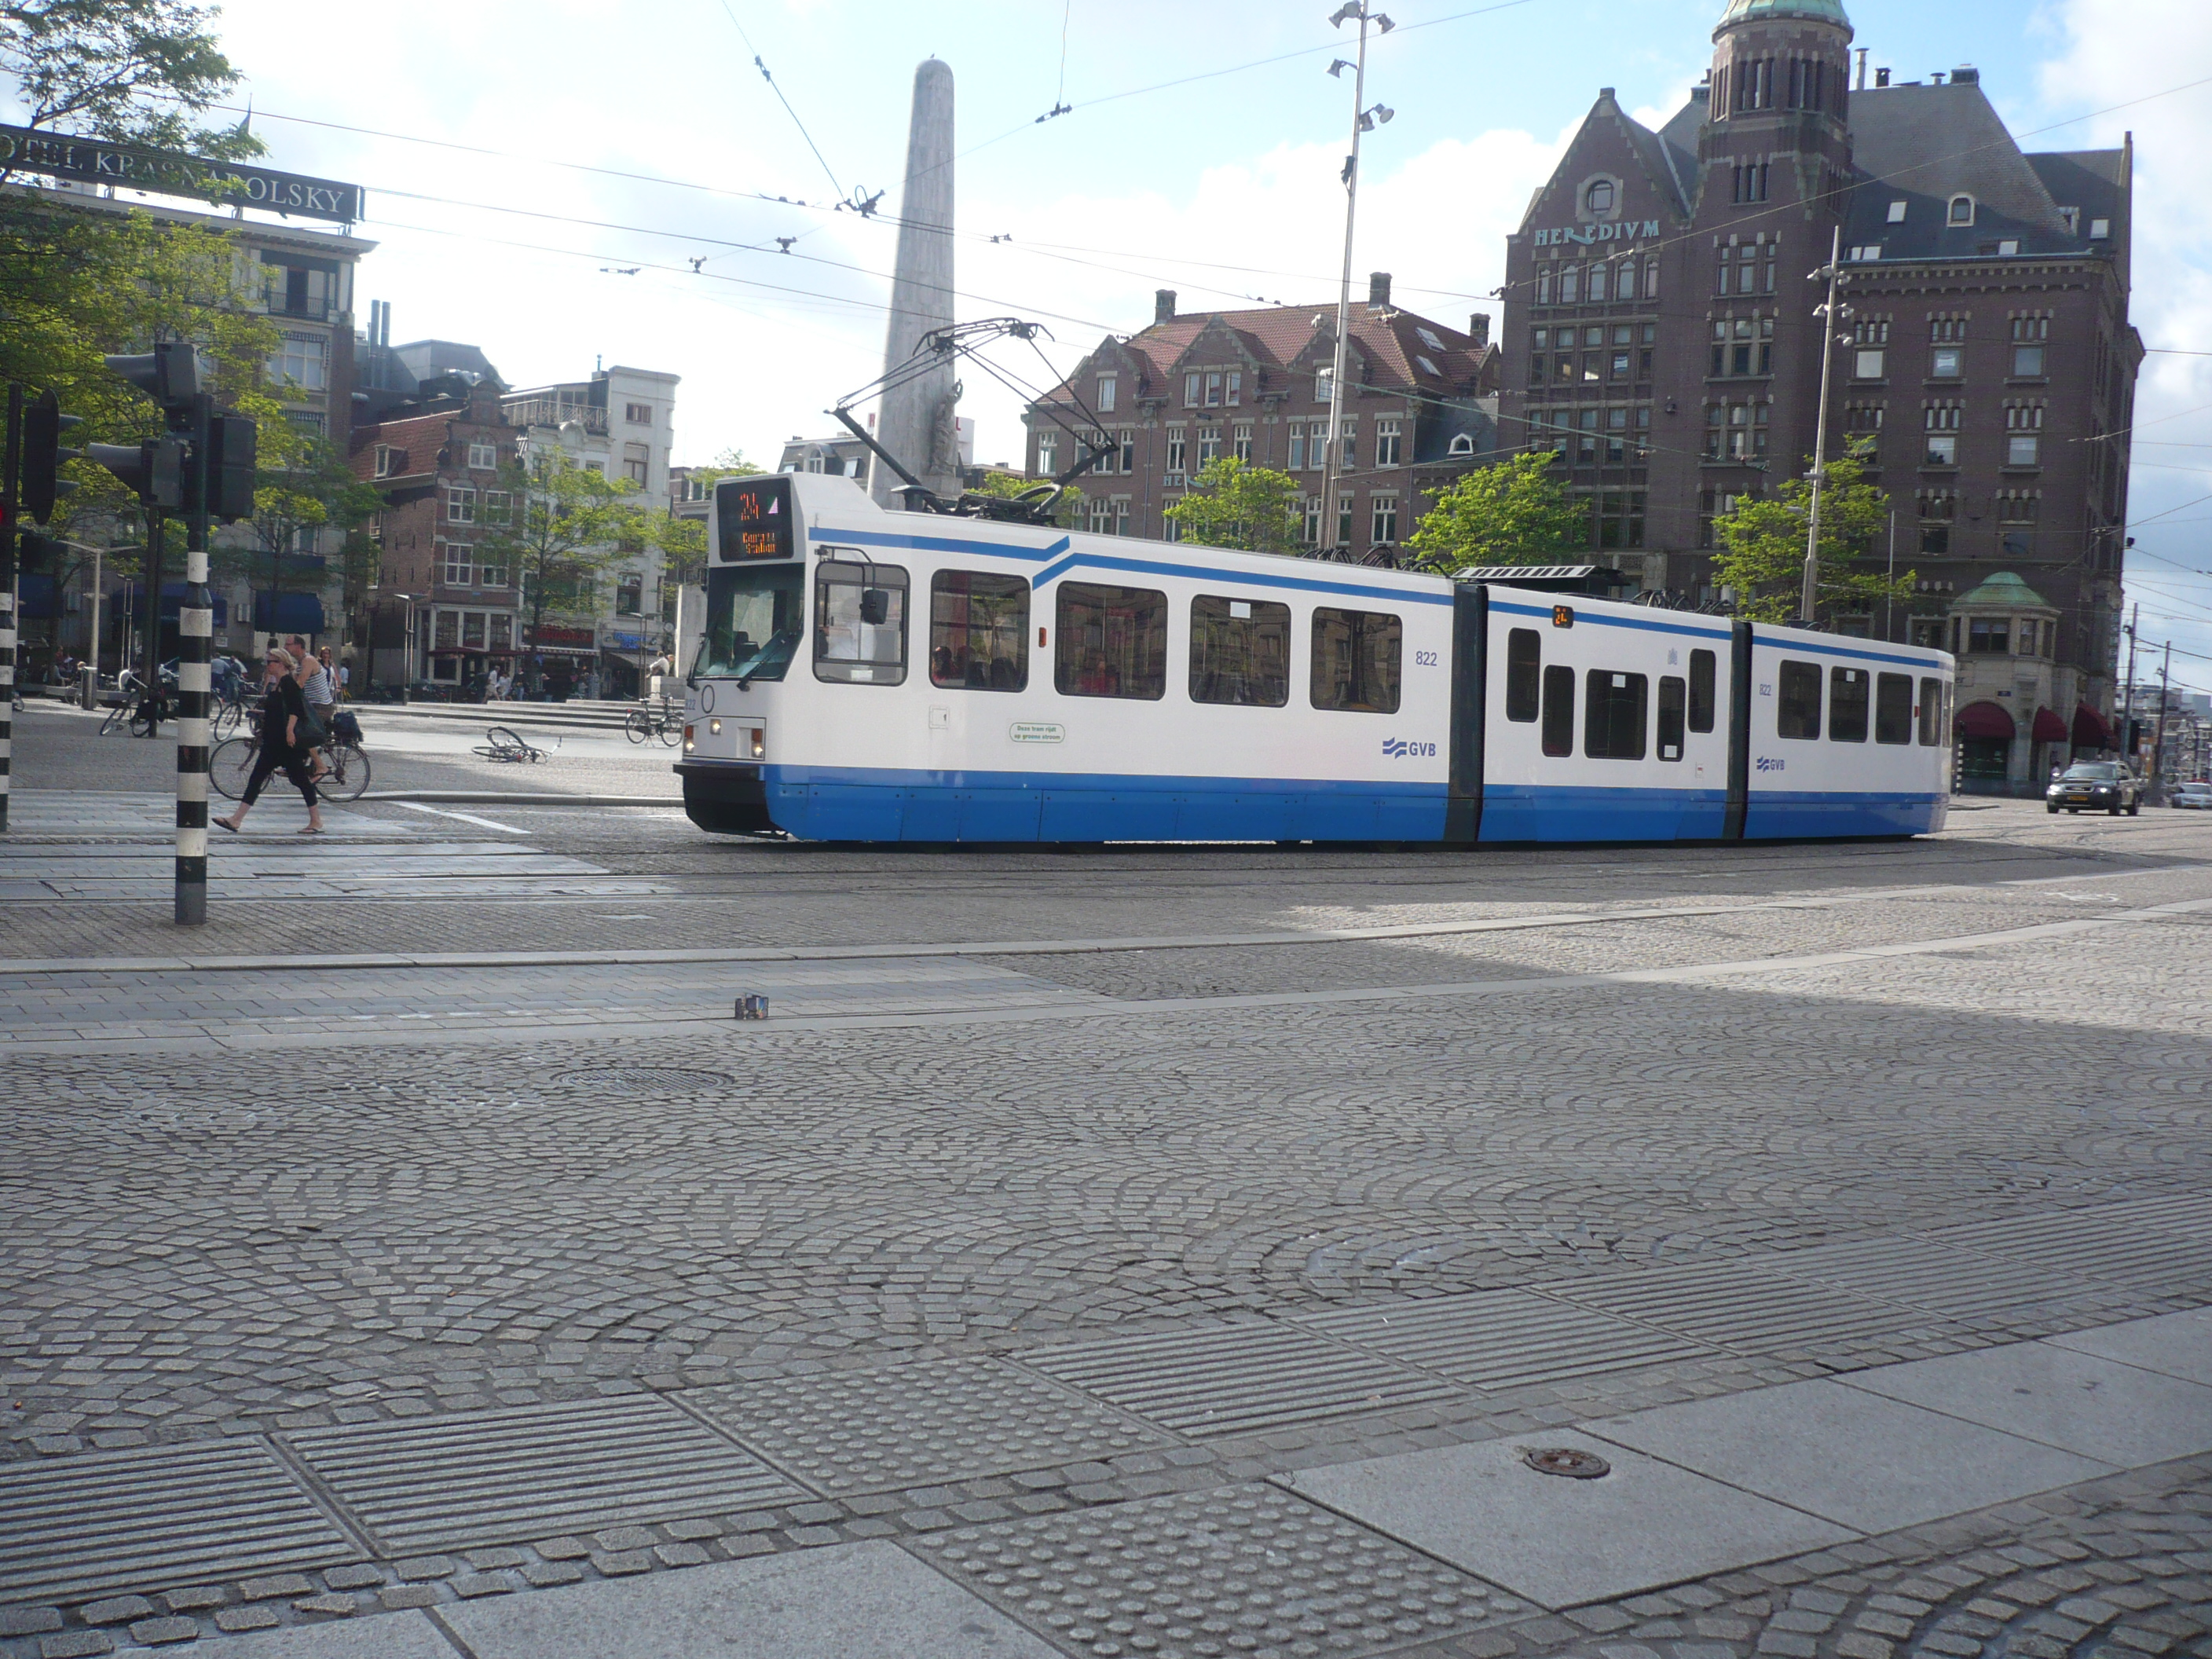 Amsterdam tram photo